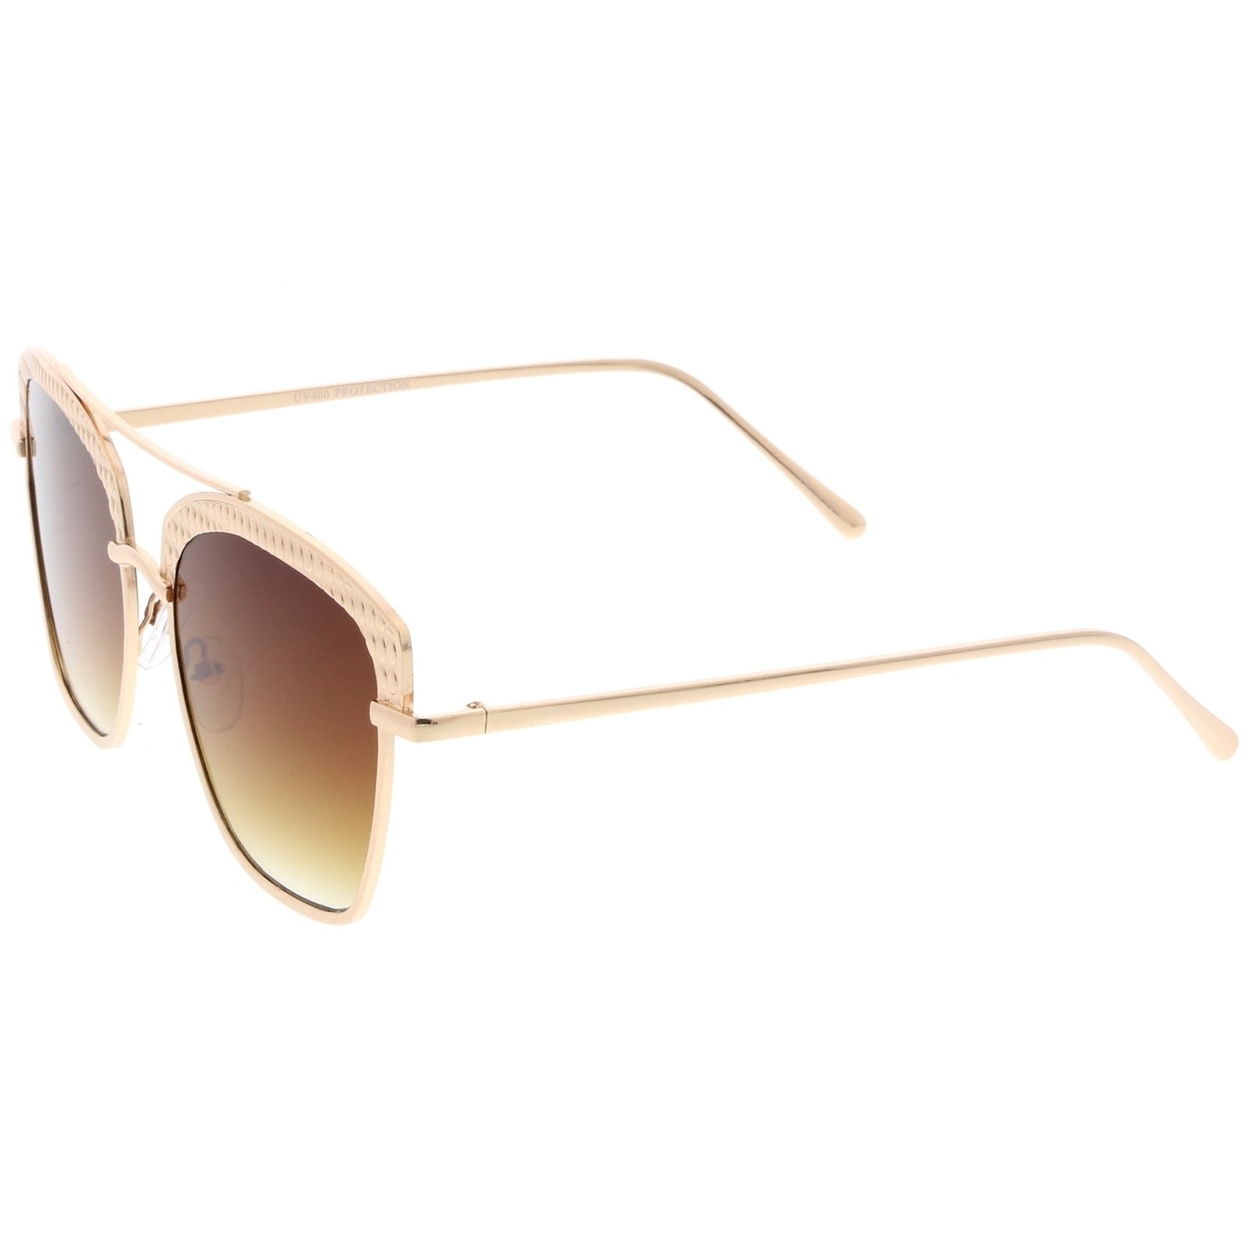 Women's Crossbar Slim Arms Textured Metal Flat Lens Square Sunglasses 58mm - Gold / Amber